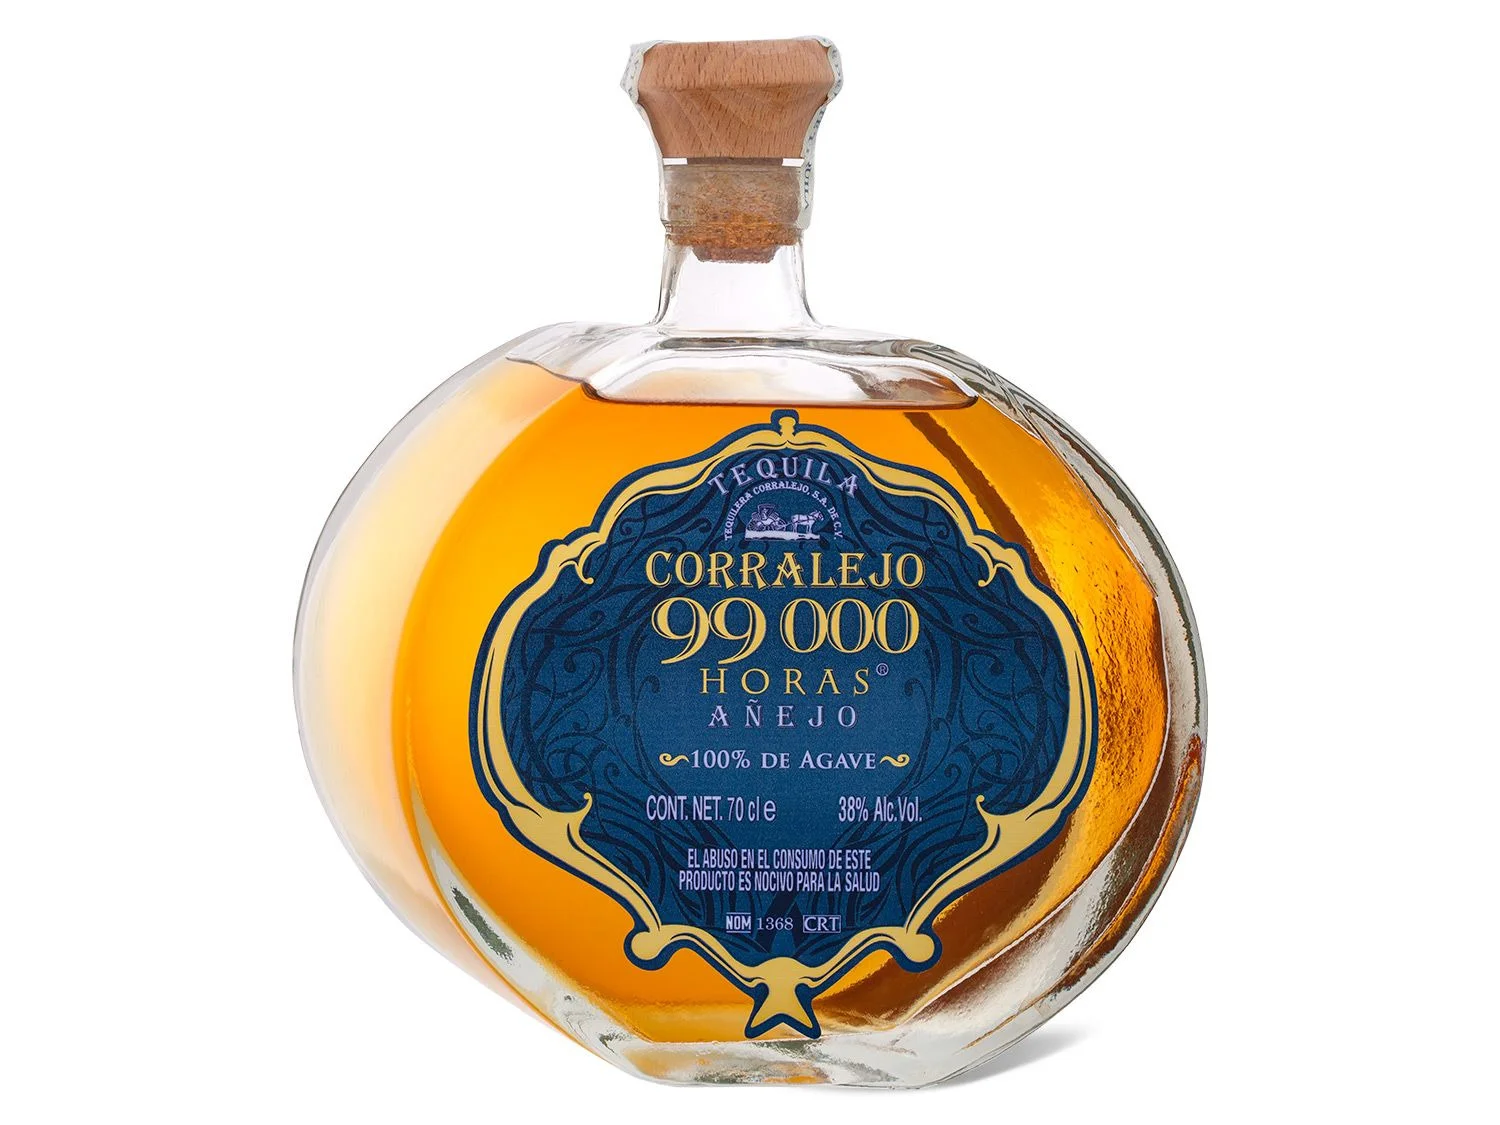 Corralejo Tequila 99,000 Horas Añejo 38% (1 x 0.7 l)